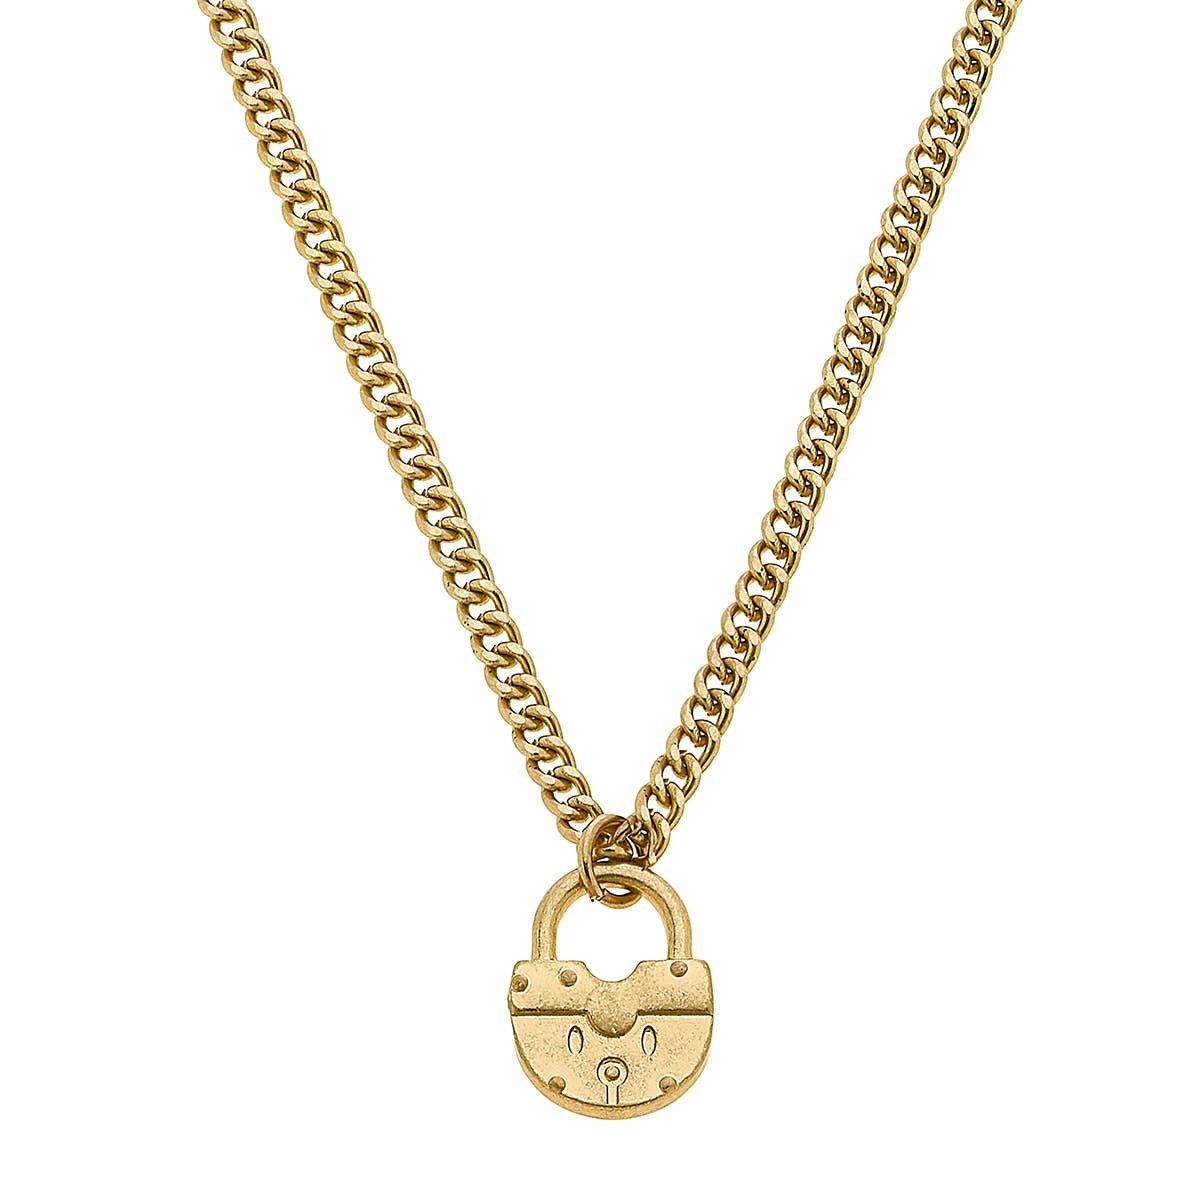 Aspen Padlock Necklace in Worn Gold